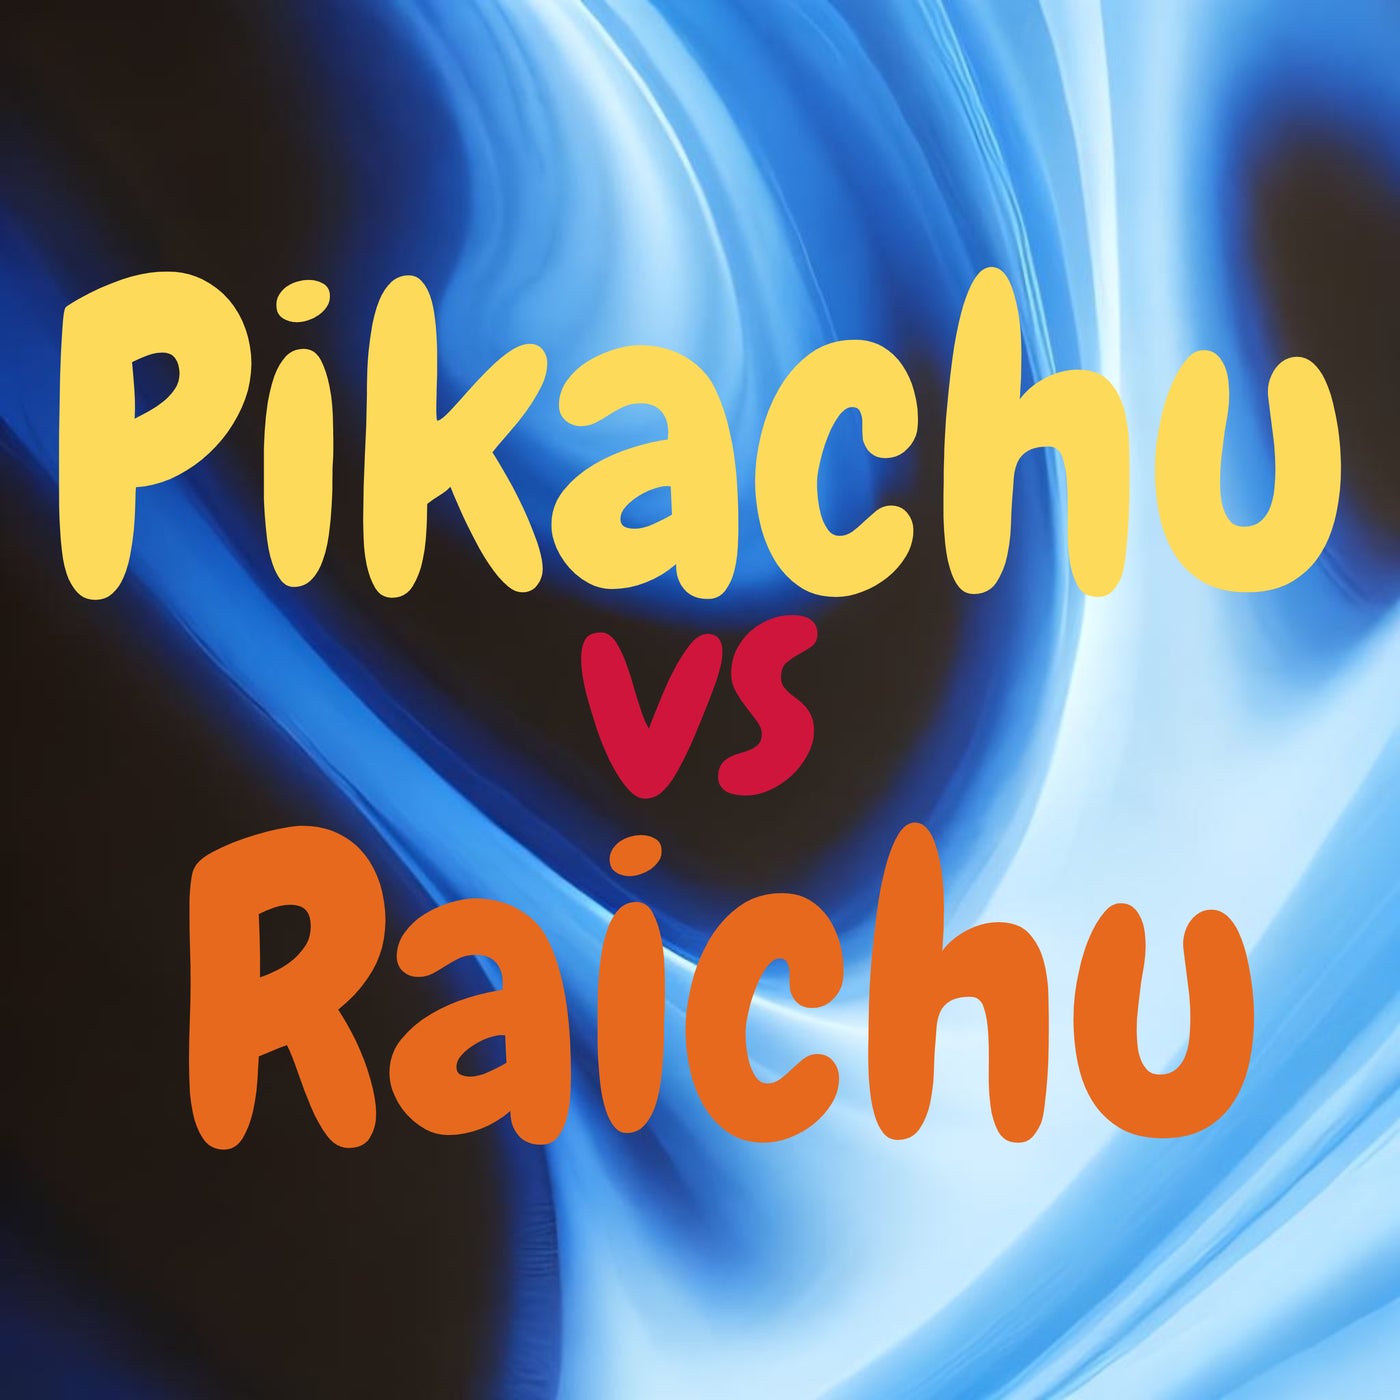 Pikachu vs Raichu